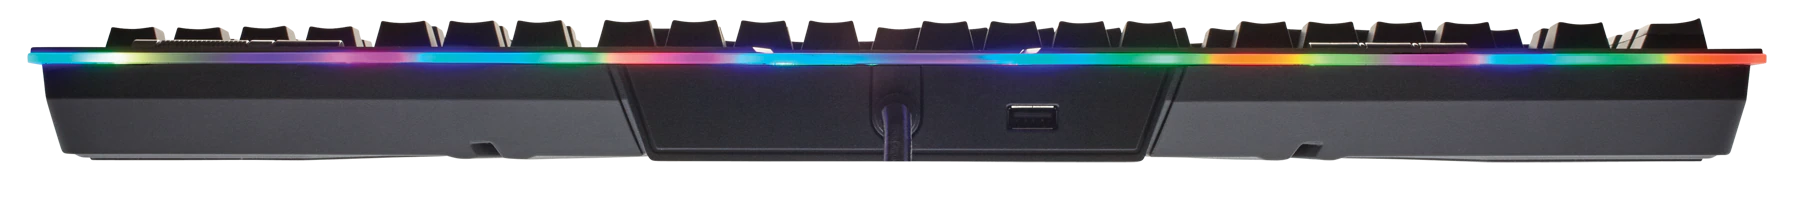 Techzones - Corsair K95 Platinum RGB Gunmetal